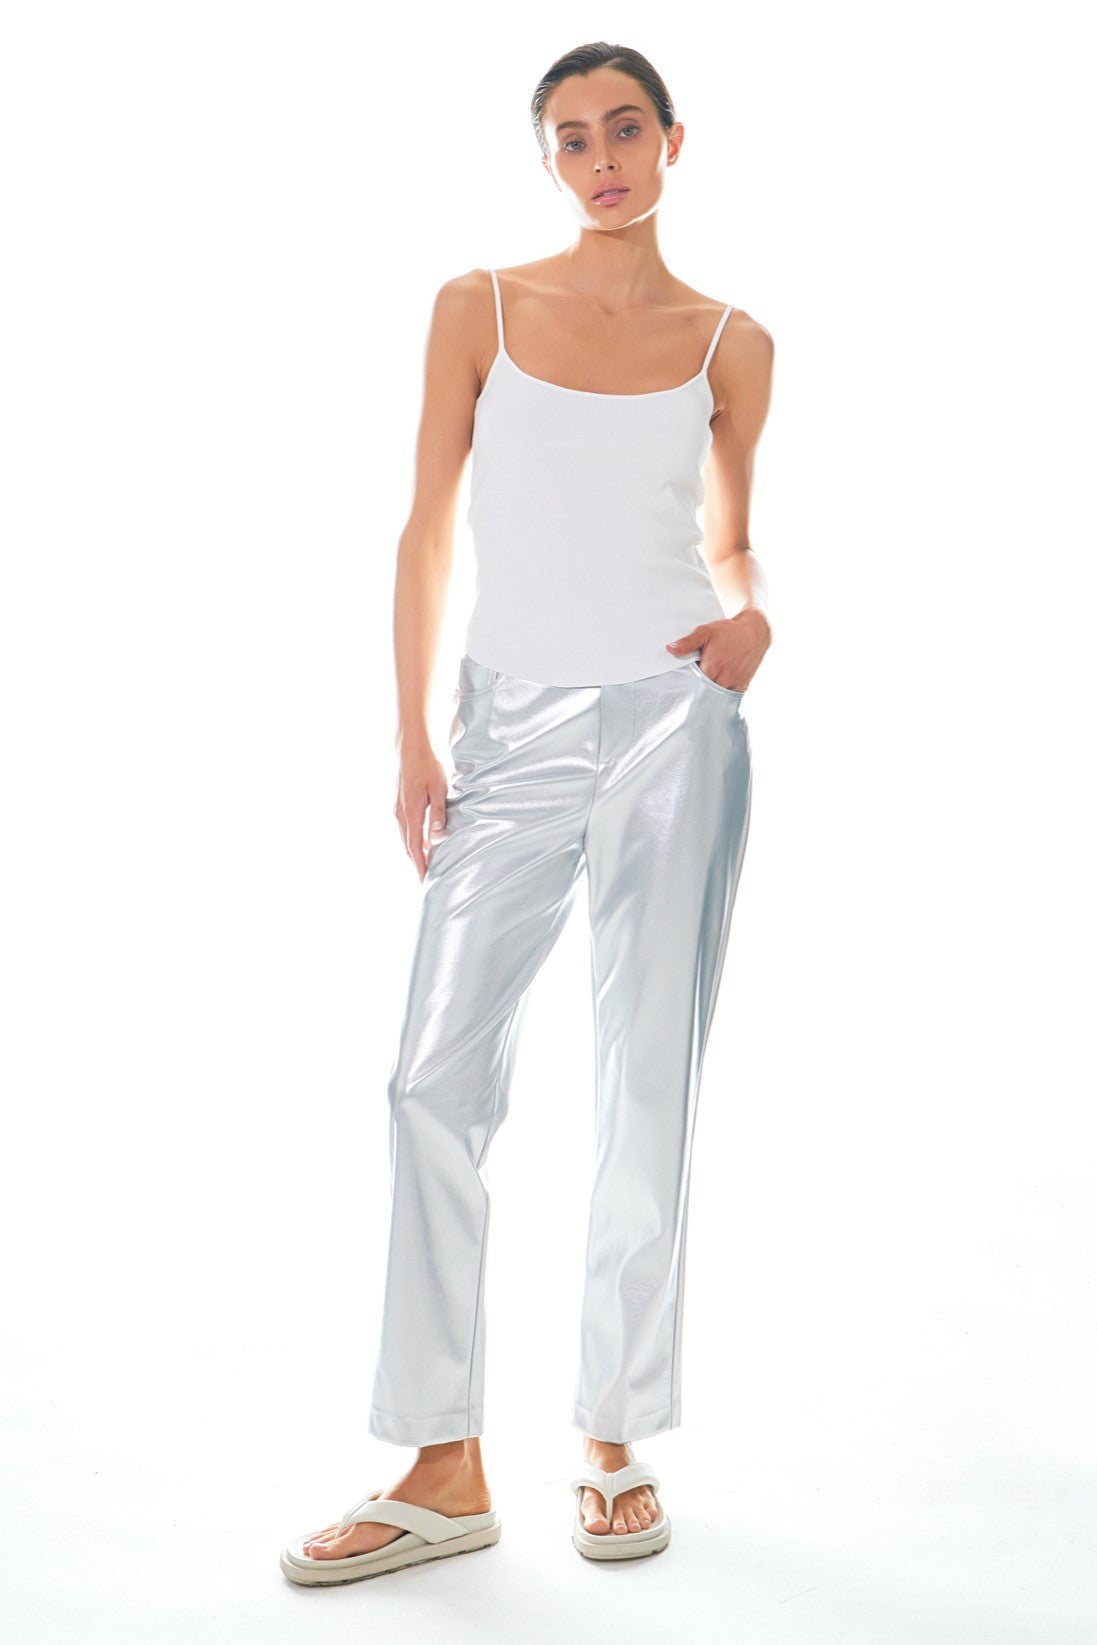 GREY LAB - Shiny PU Pants - PANTS available at Objectrare